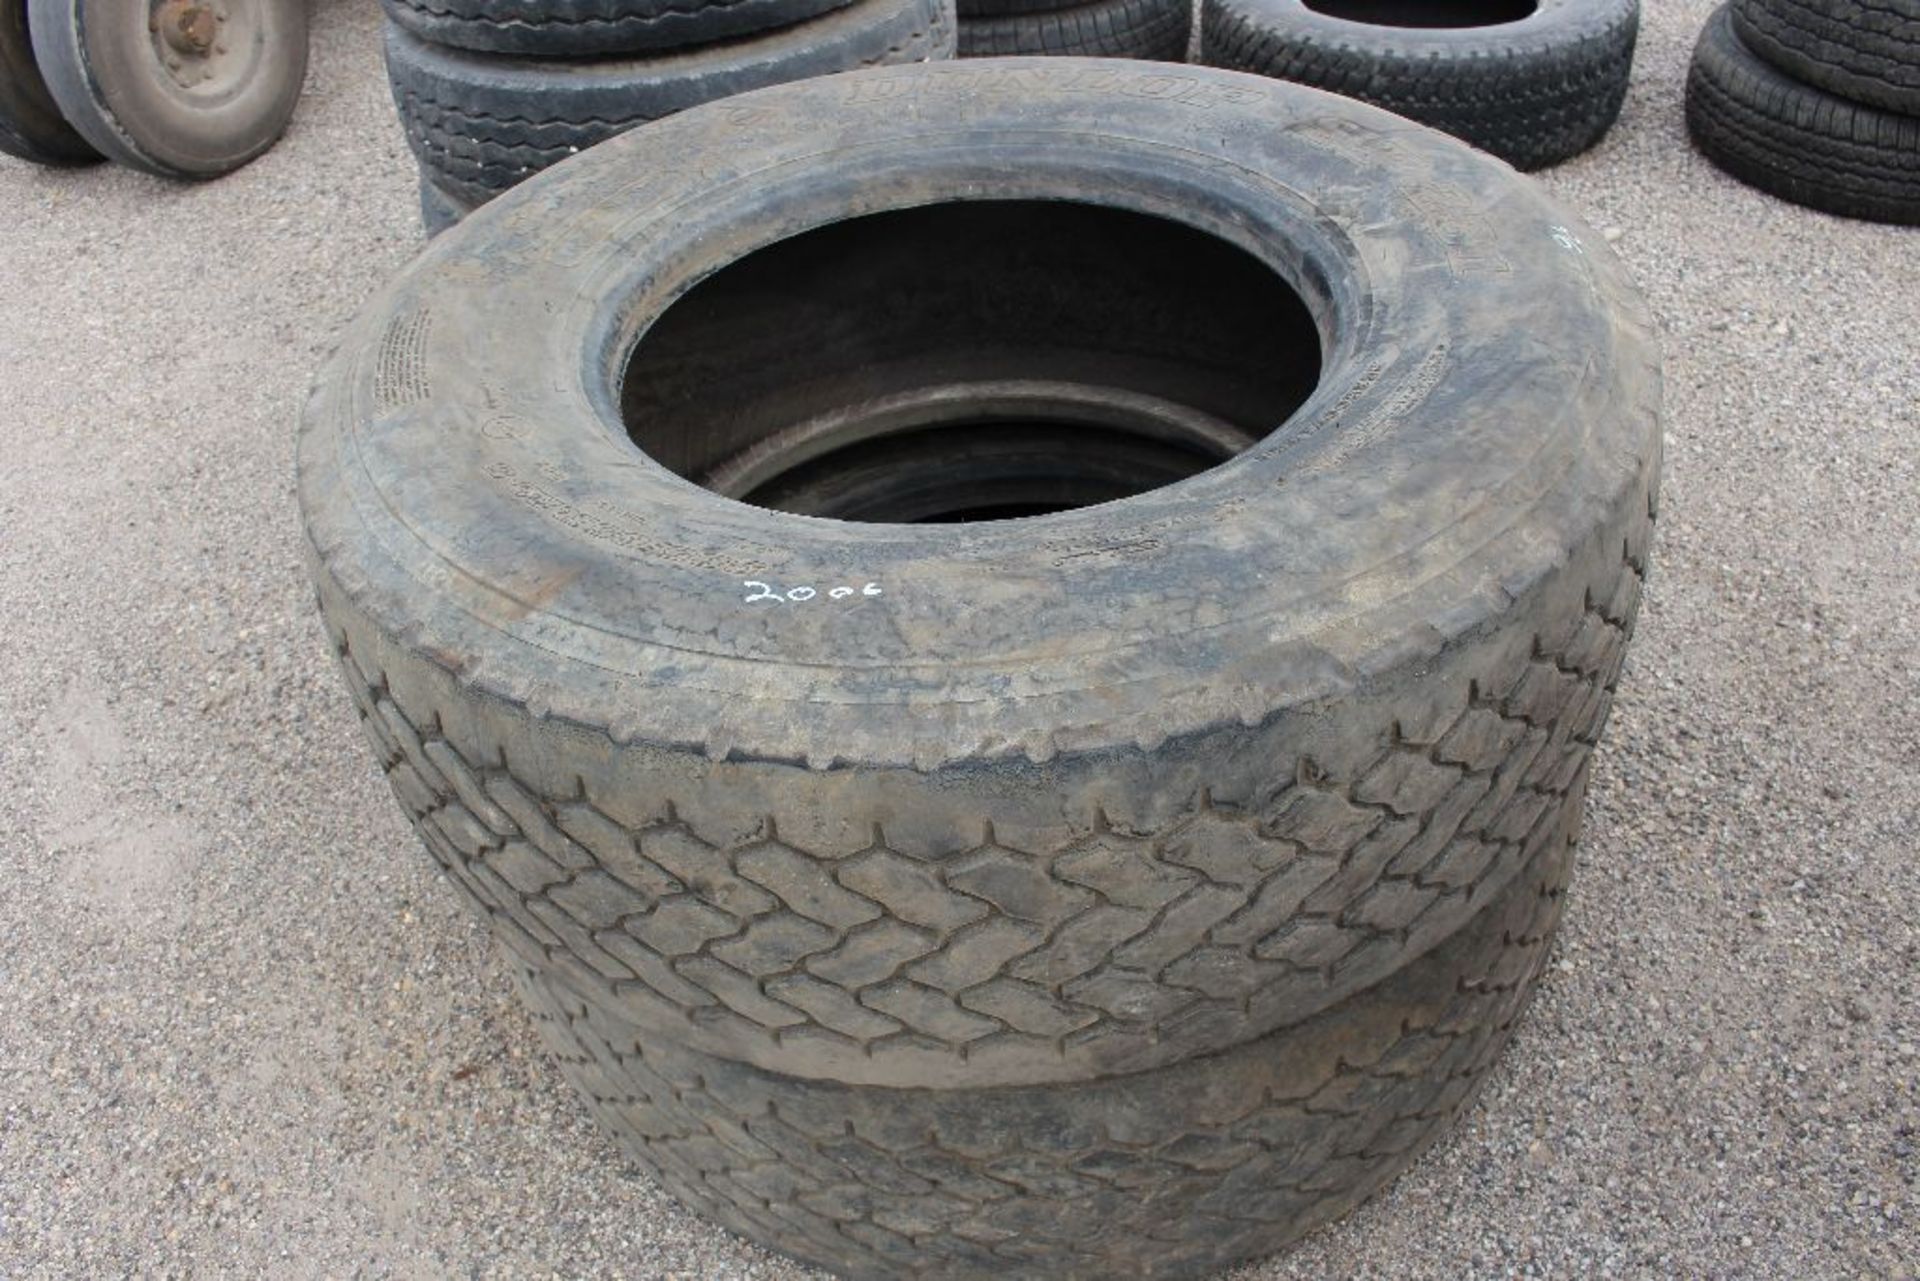 (2) Large Dunlop tires, 385/65 R 22.5.